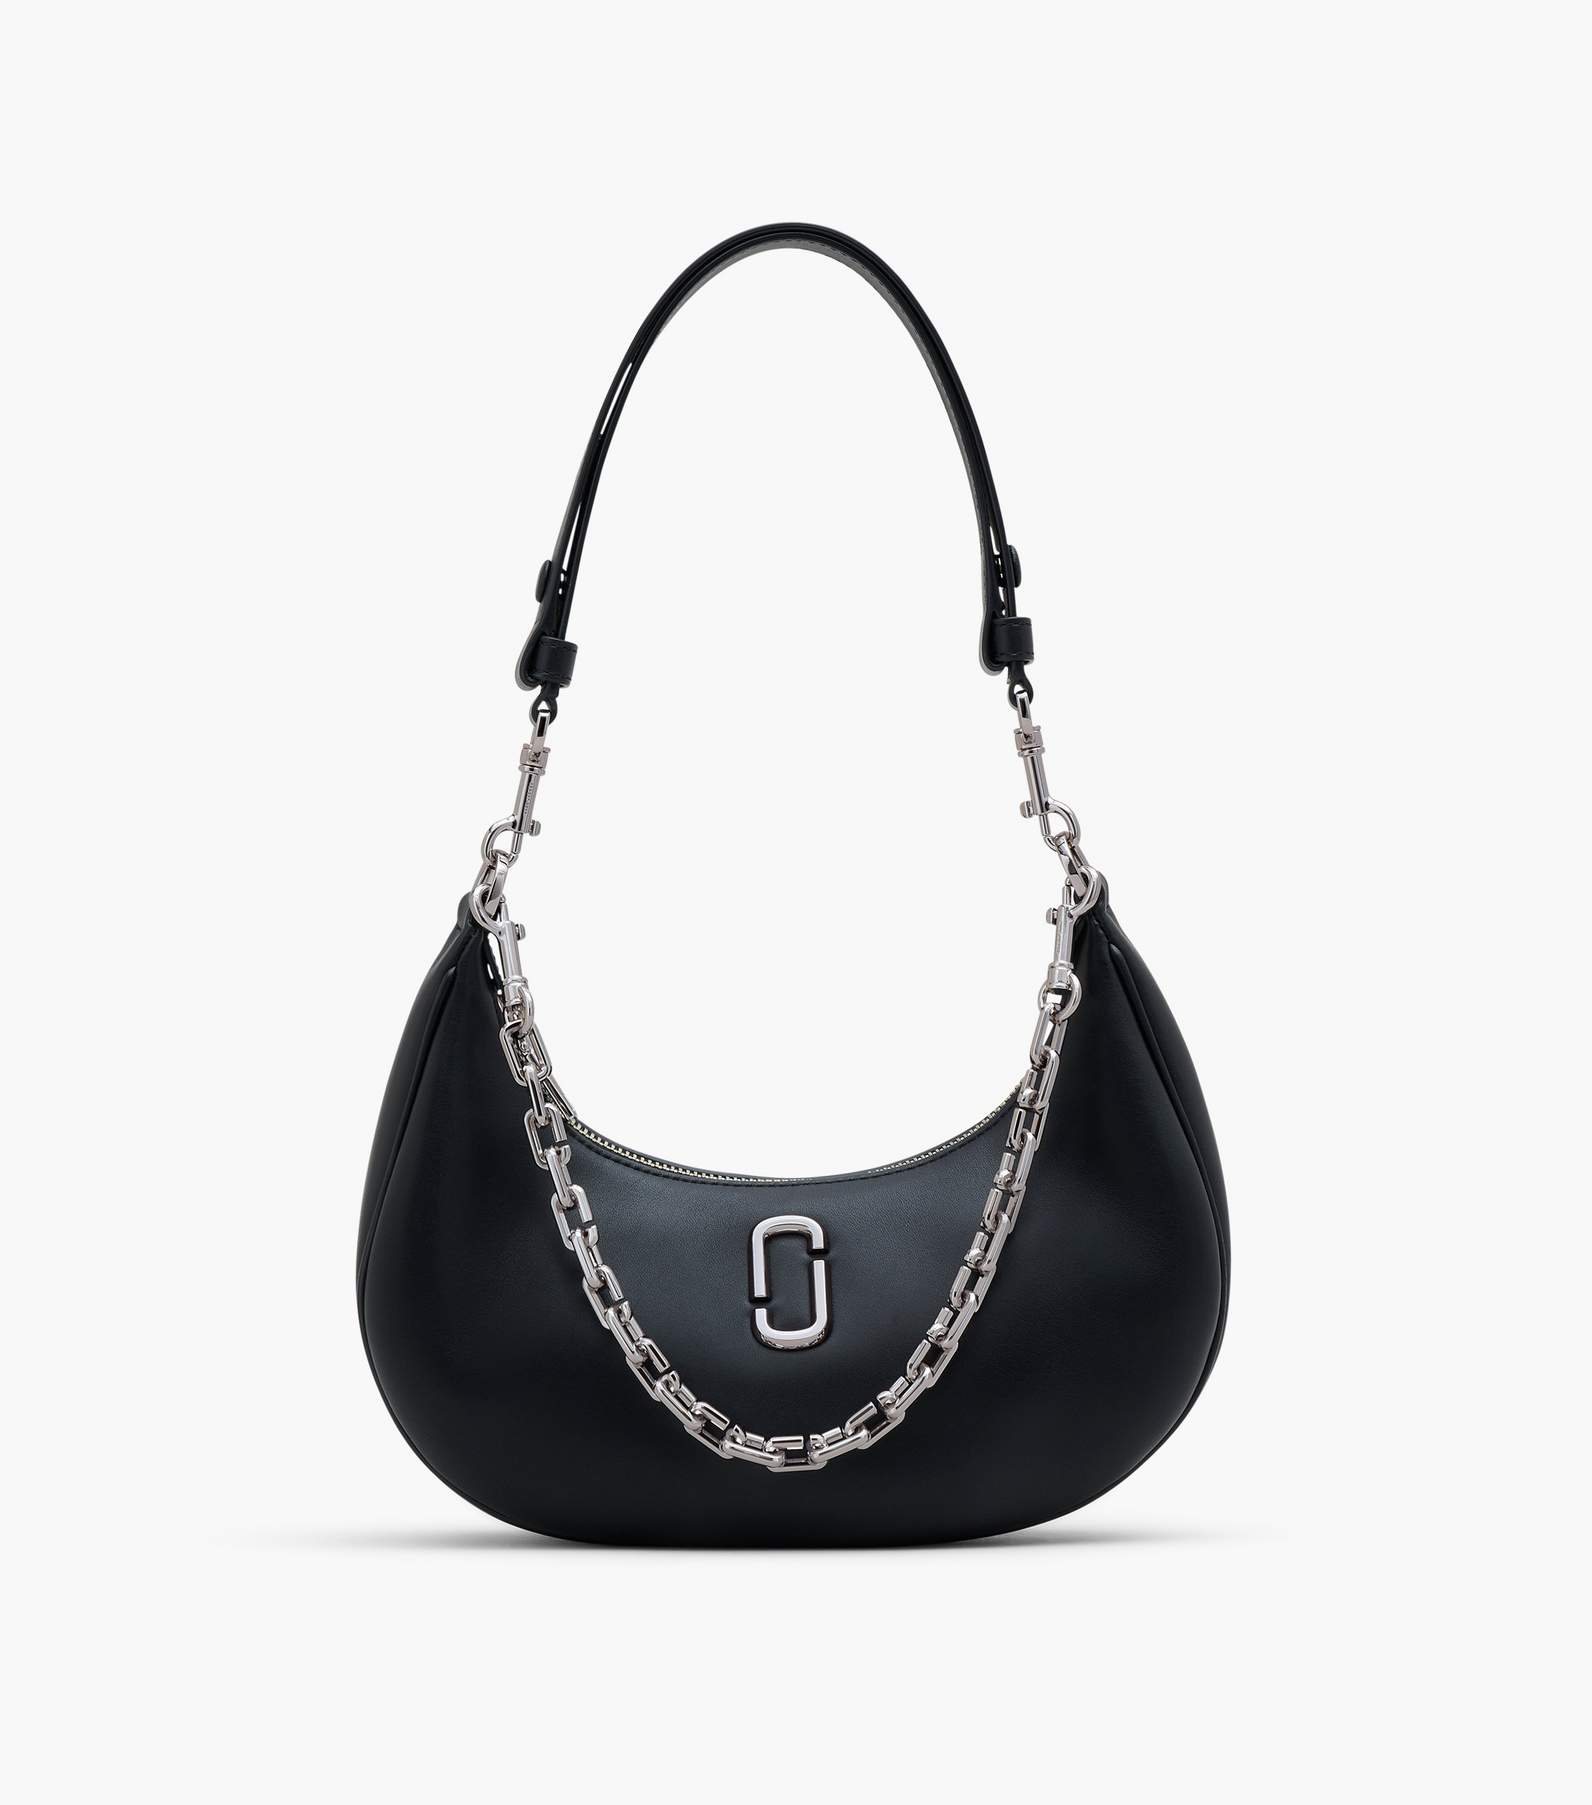 Louis Vuitton - Authenticated Jersey Handbag - Leather Black Plain for Women, Good Condition